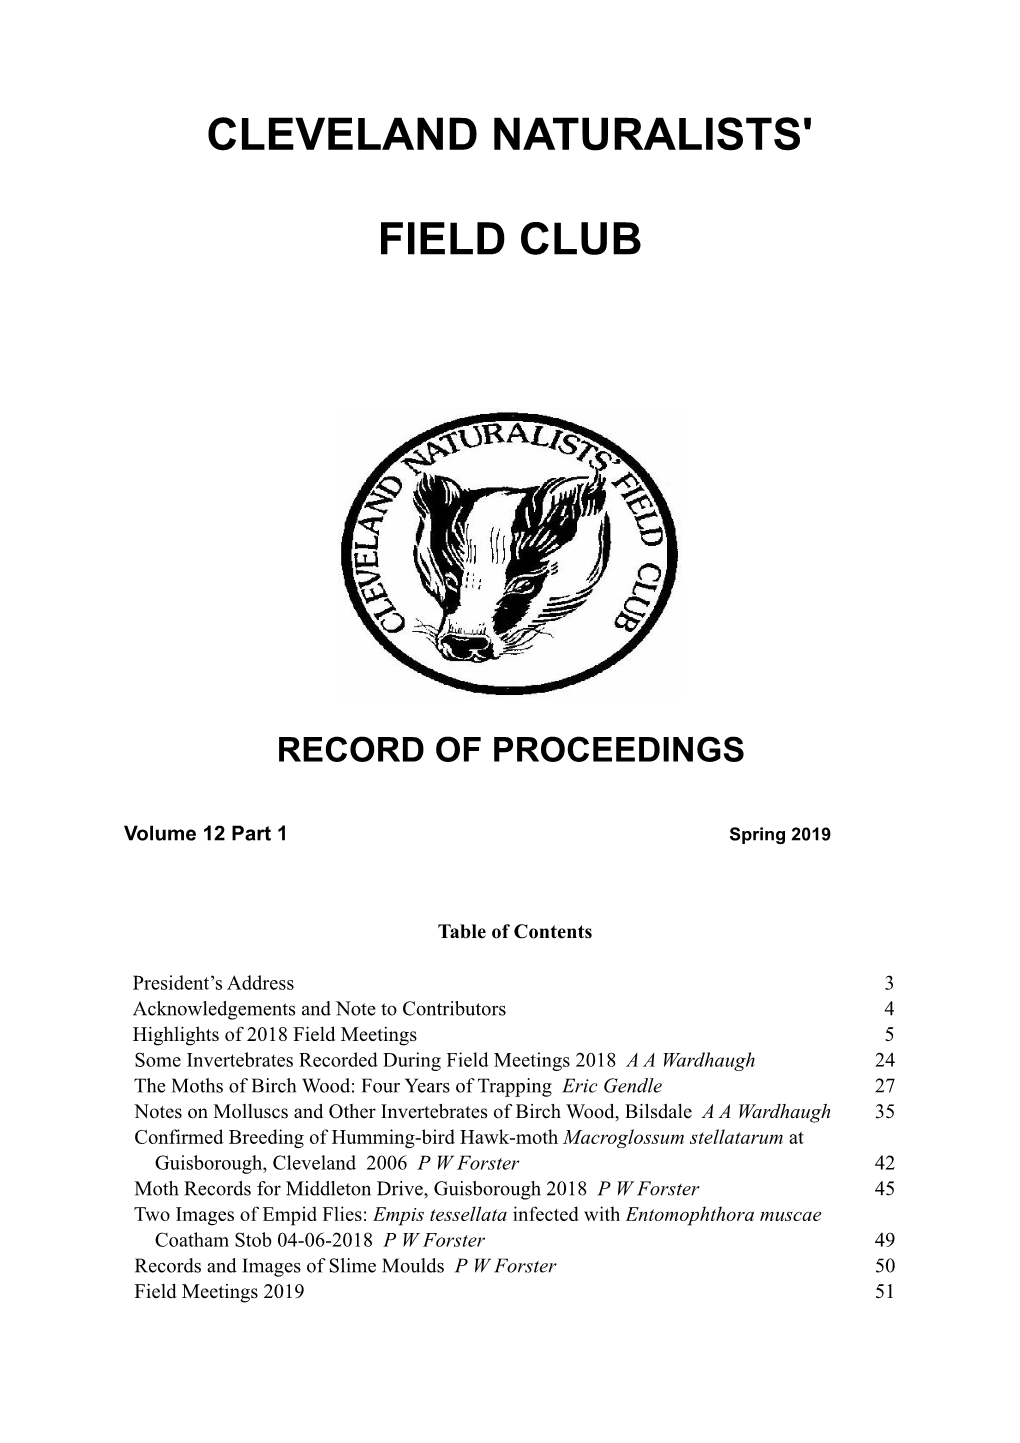 Proceedings 2019 PDF Reduced